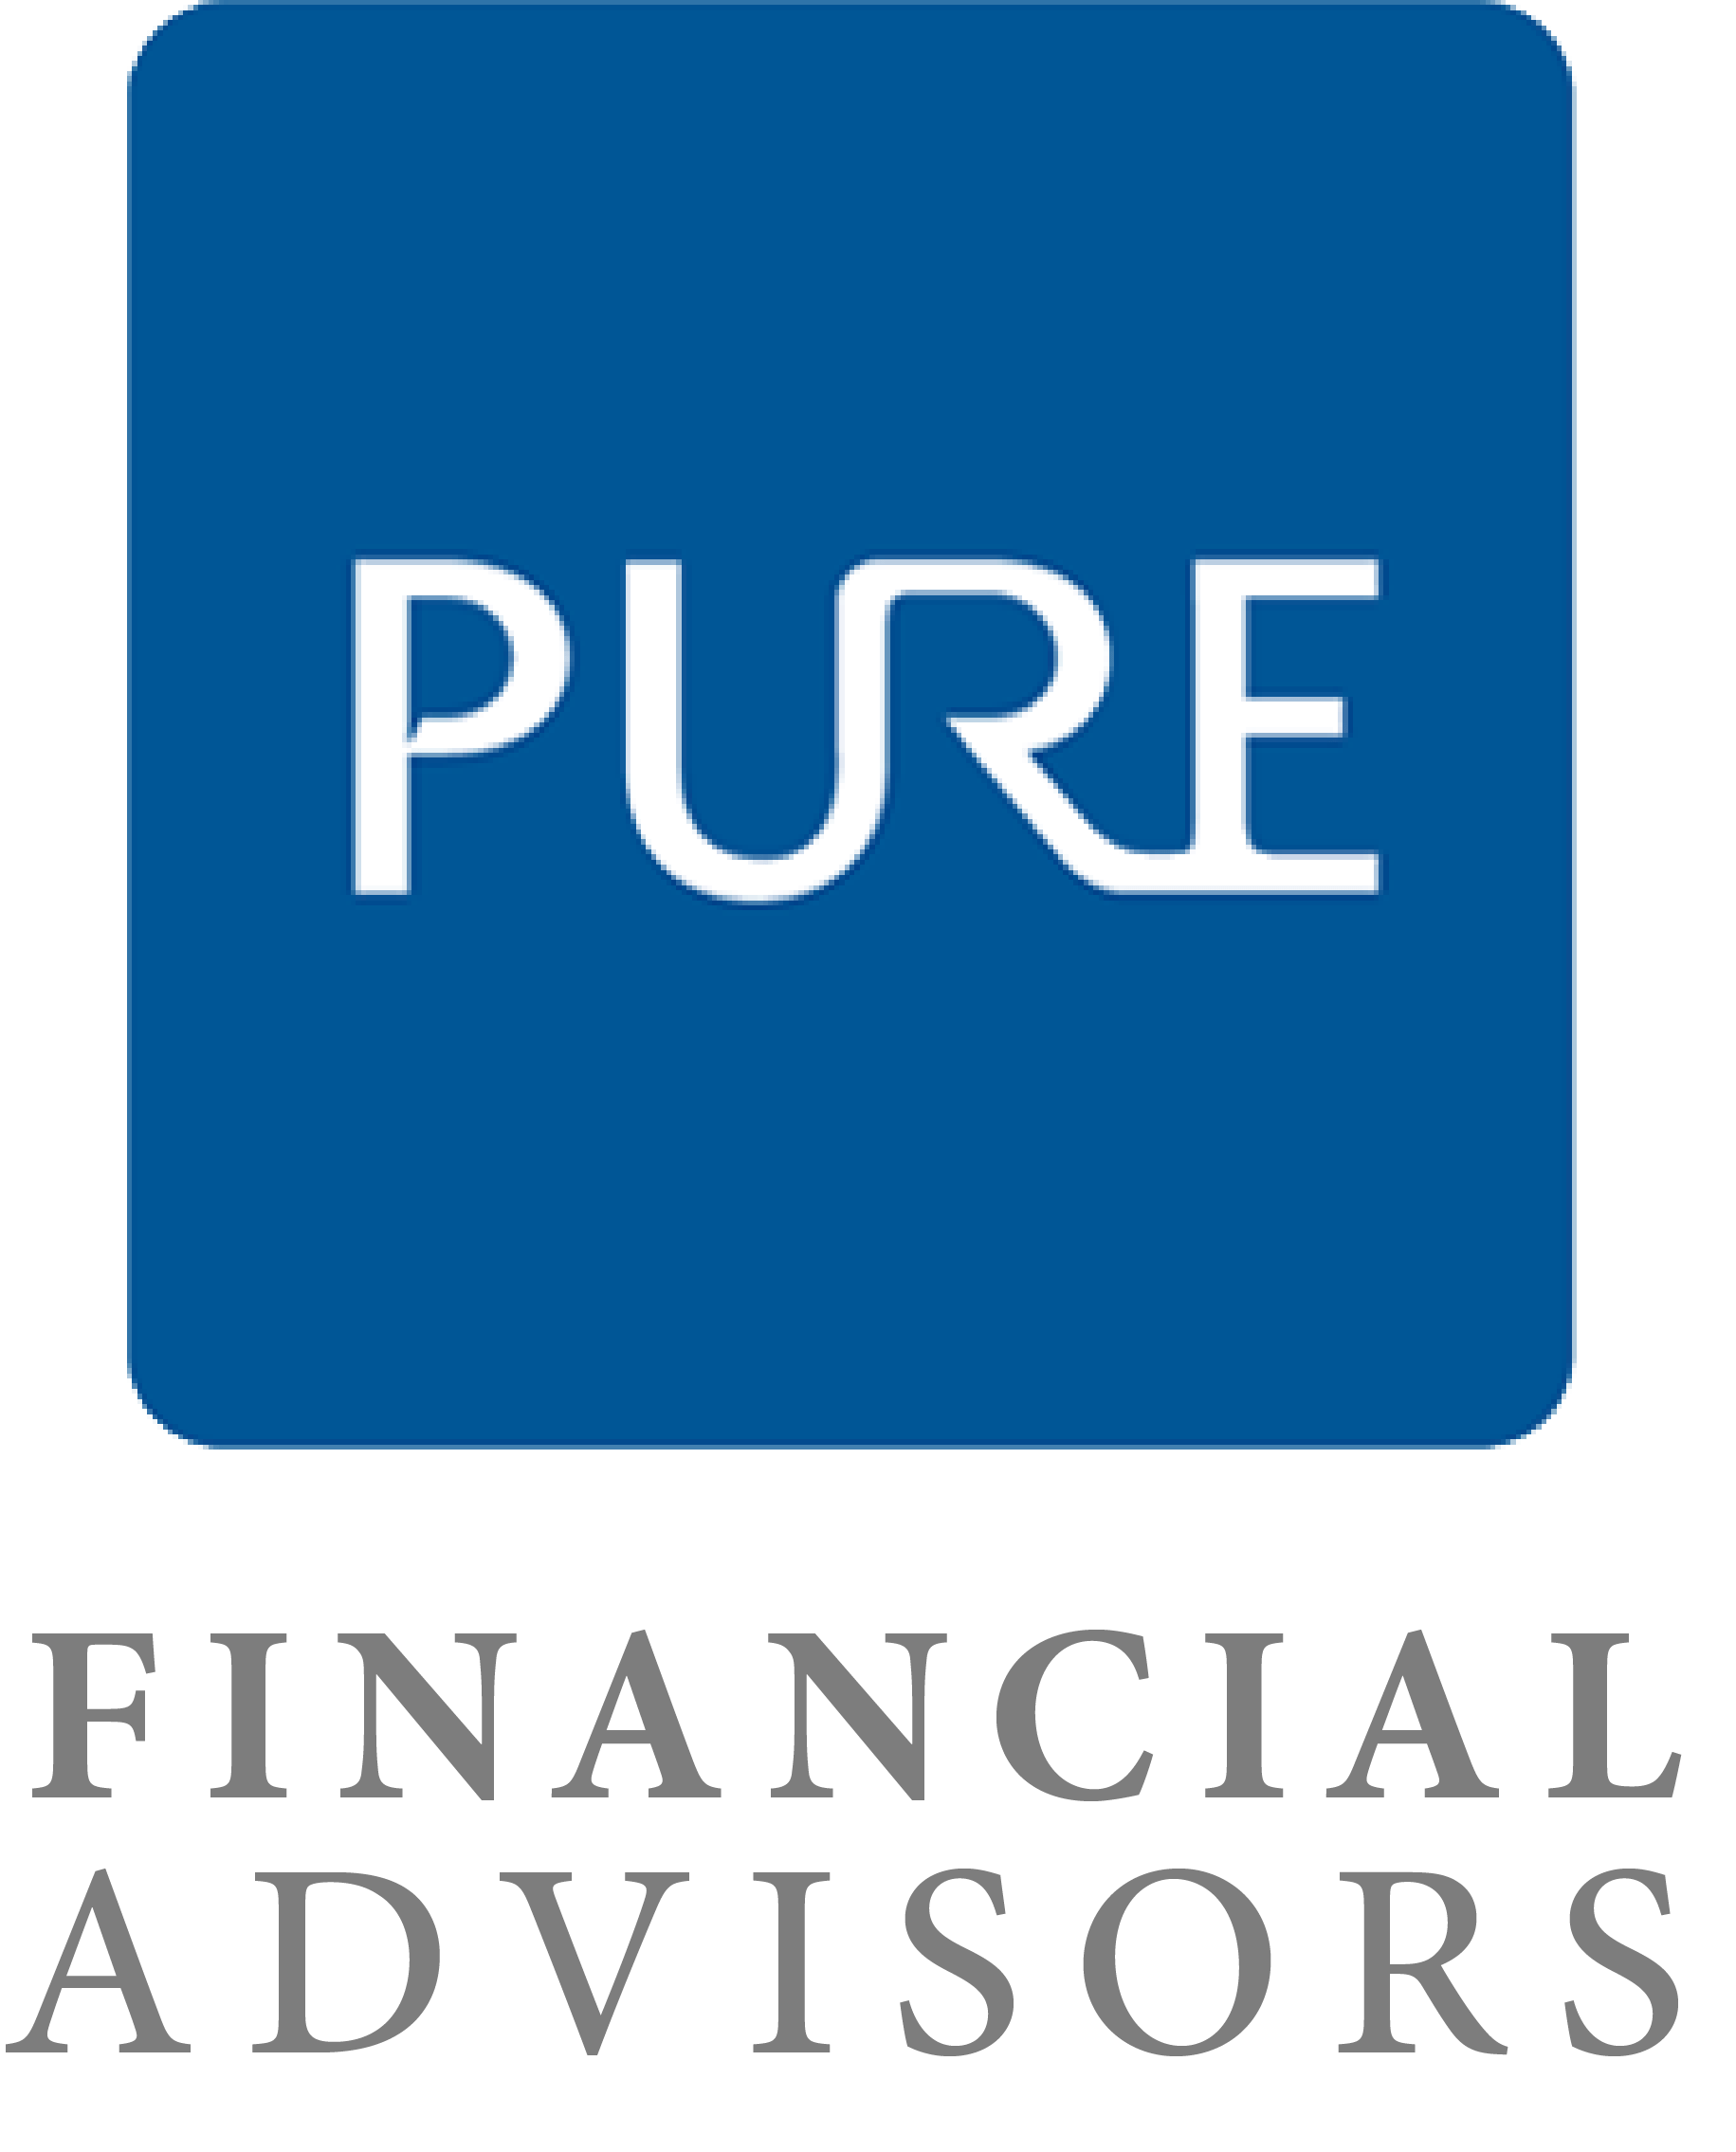 Ask Financials Logo - Fiduciary Financial Advisors – Fee-Only Financial Advisors | Pure ...